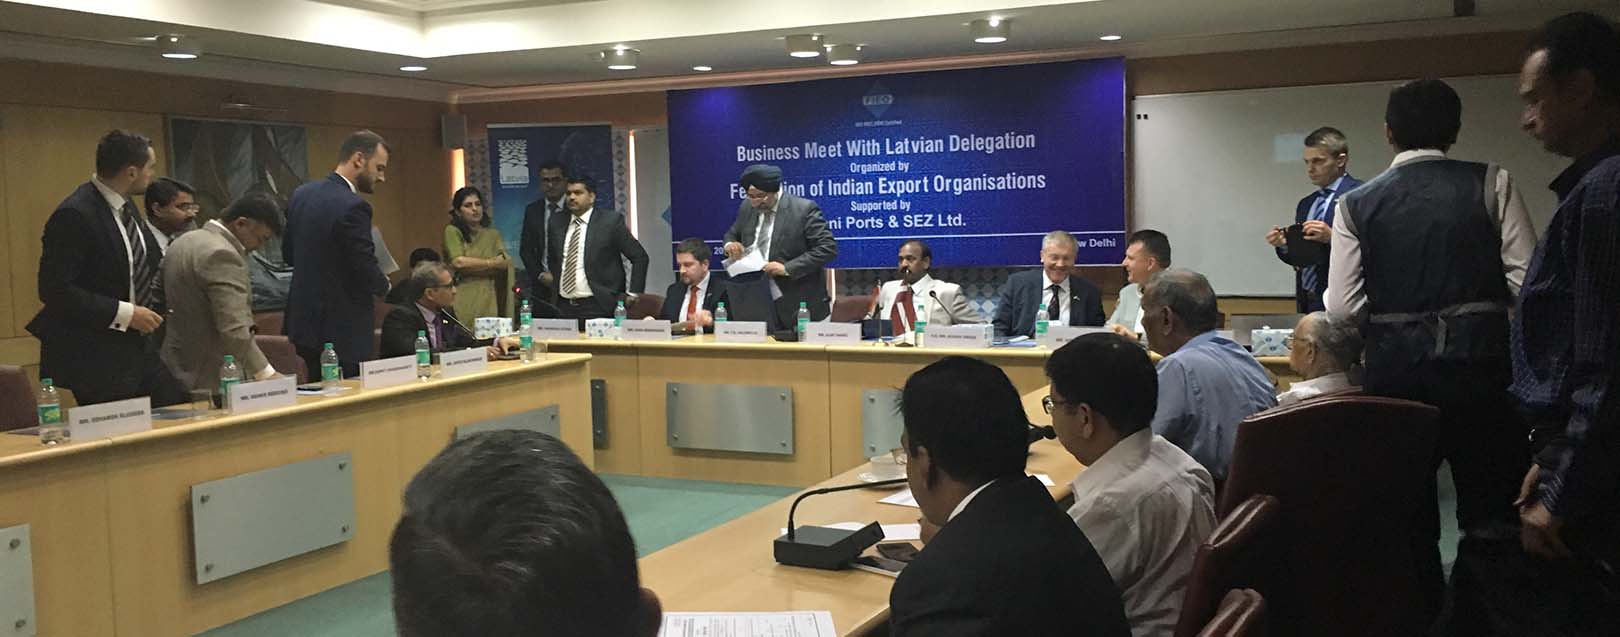 India, Latvia explore new business ties